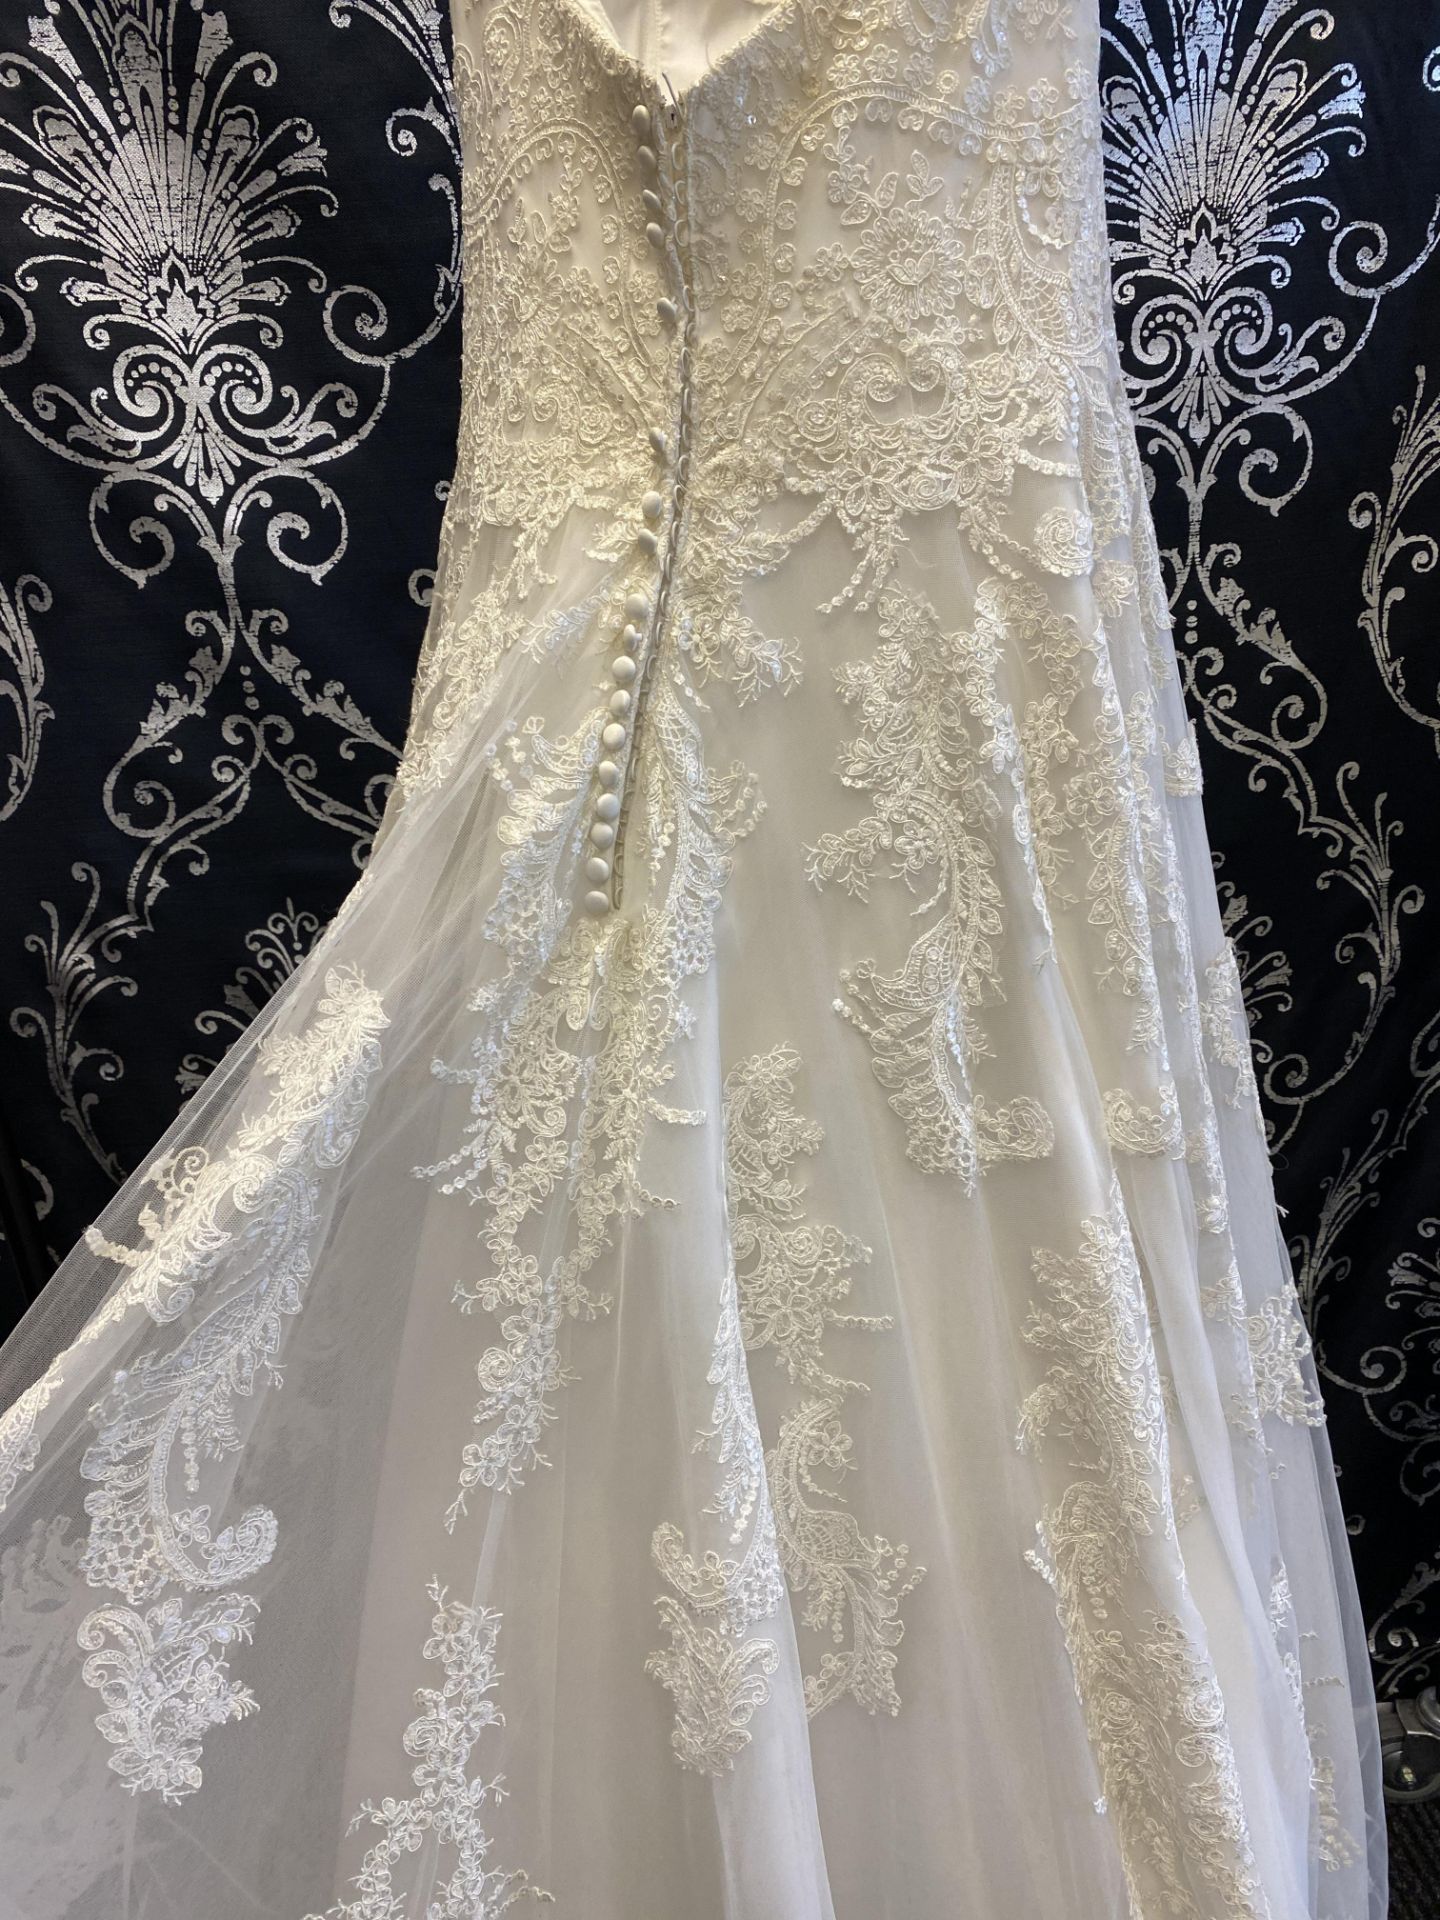 1 x MORI LEE '2787' Stunning Strapless Lace And Chiffon Designer Wedding Dress RRP £1,200 UK 12 - Image 2 of 12